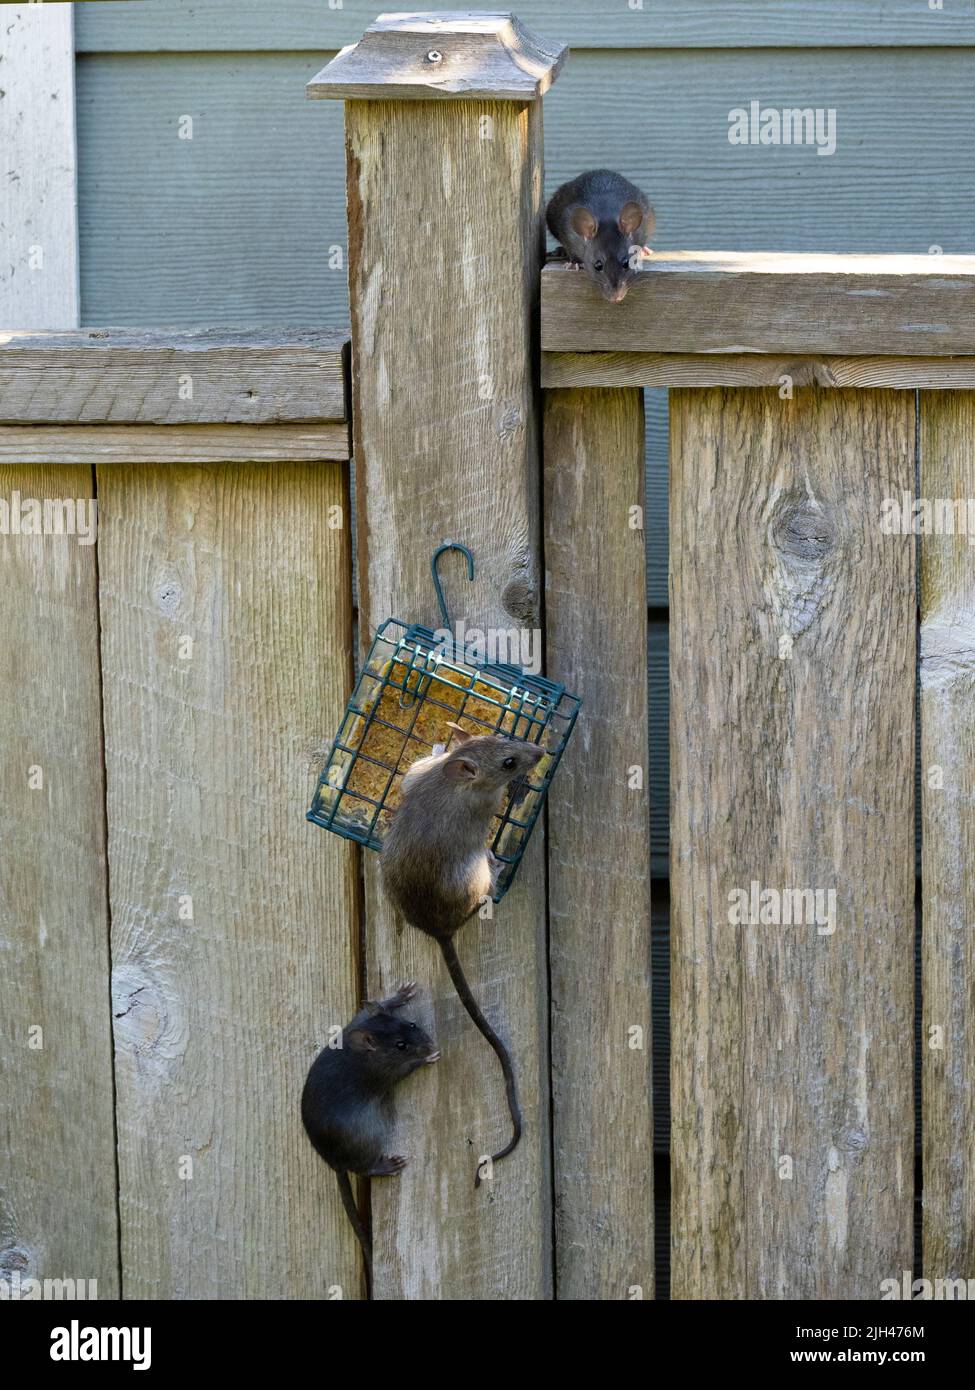 three wild ship rats (Rattus rattus) raiding a suet bird feeder hung on a fencepost Stock Photo